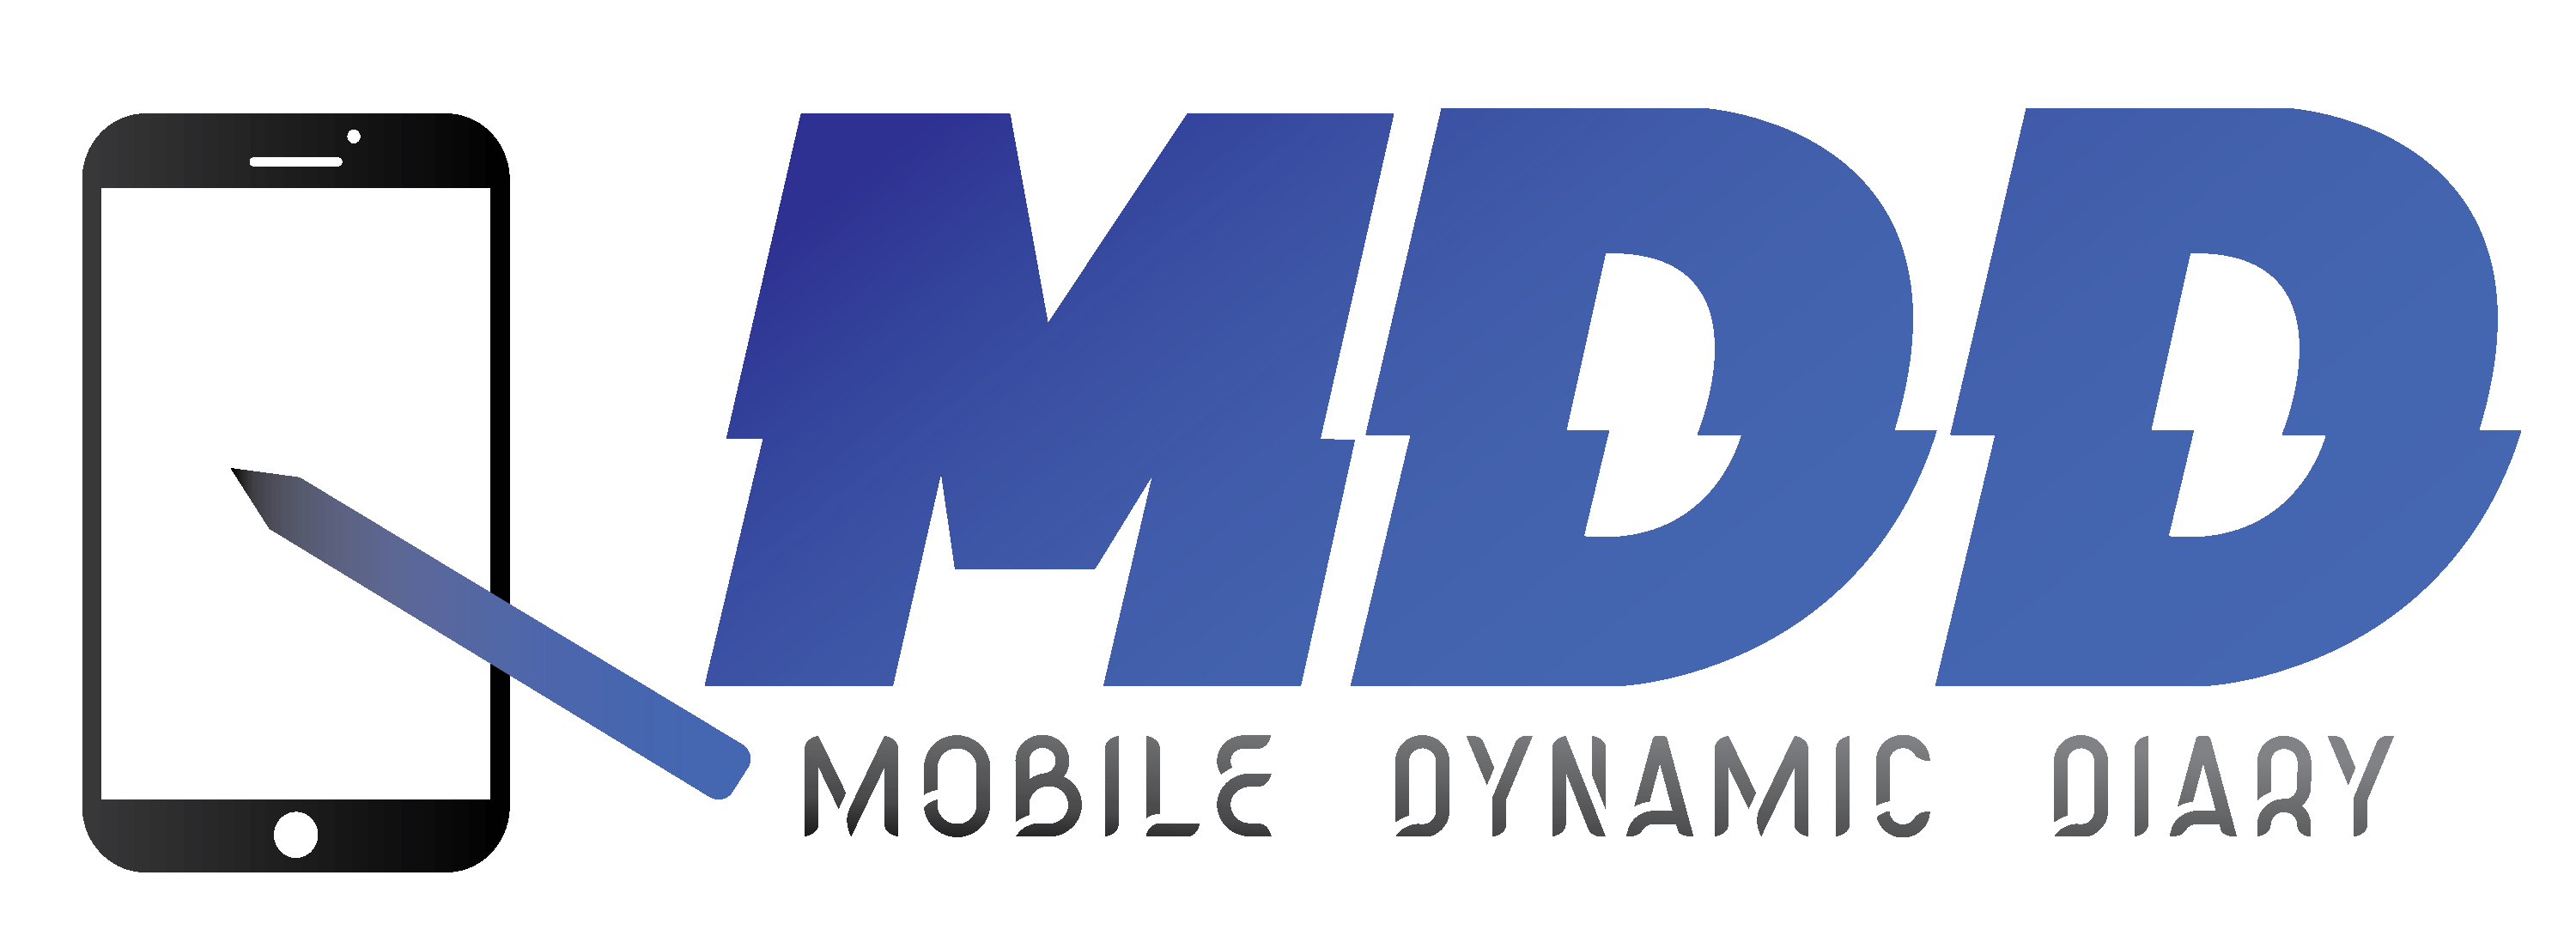 Mobile Dynamics Diary